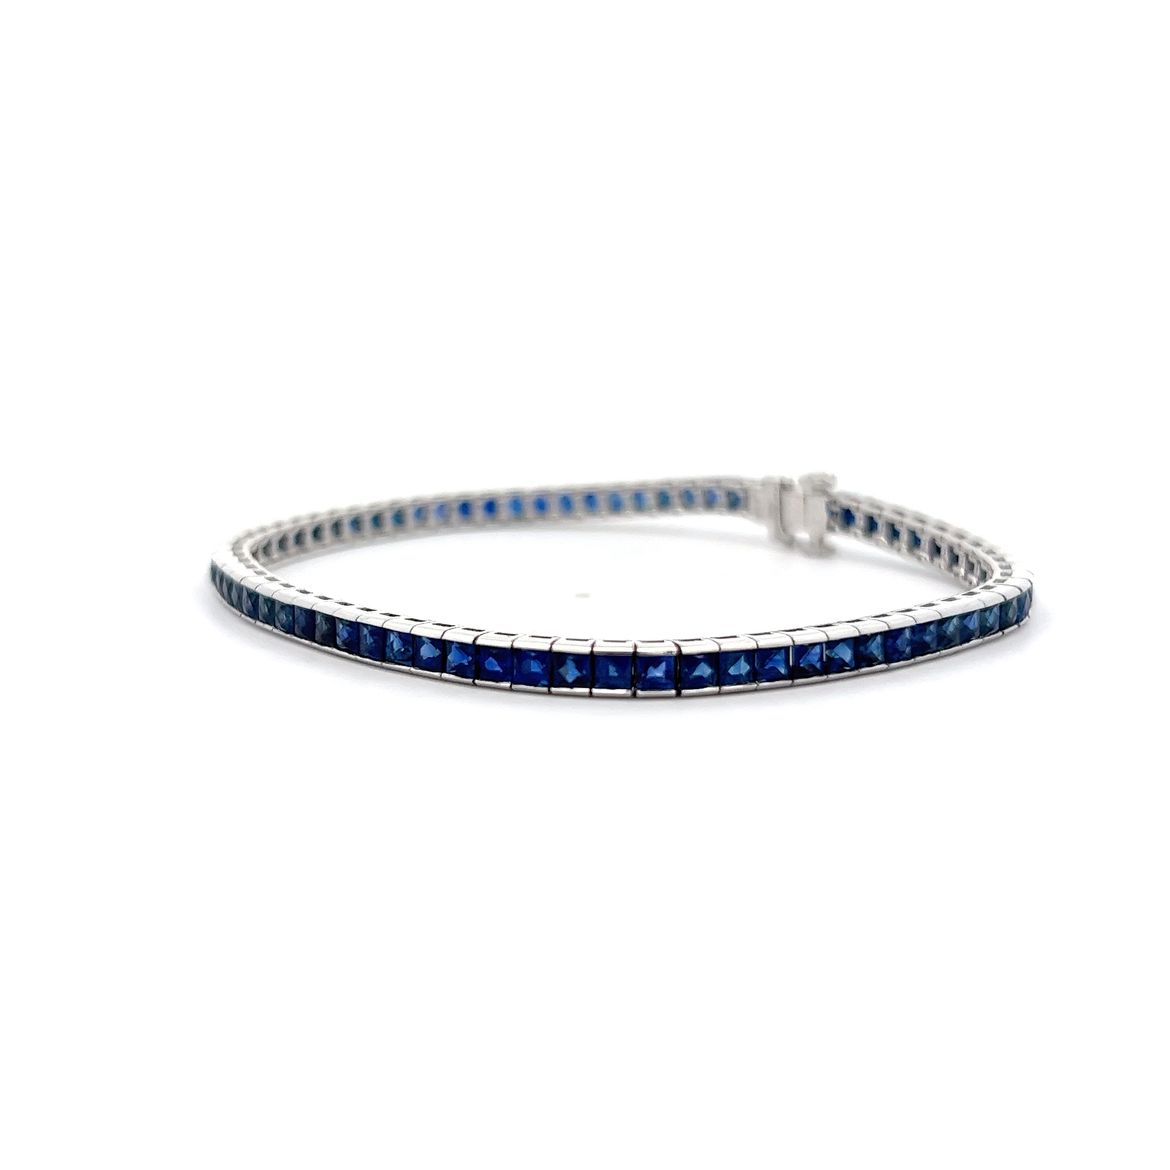 7 Carat Blue Sapphire Tennis Bracelet in Platinum